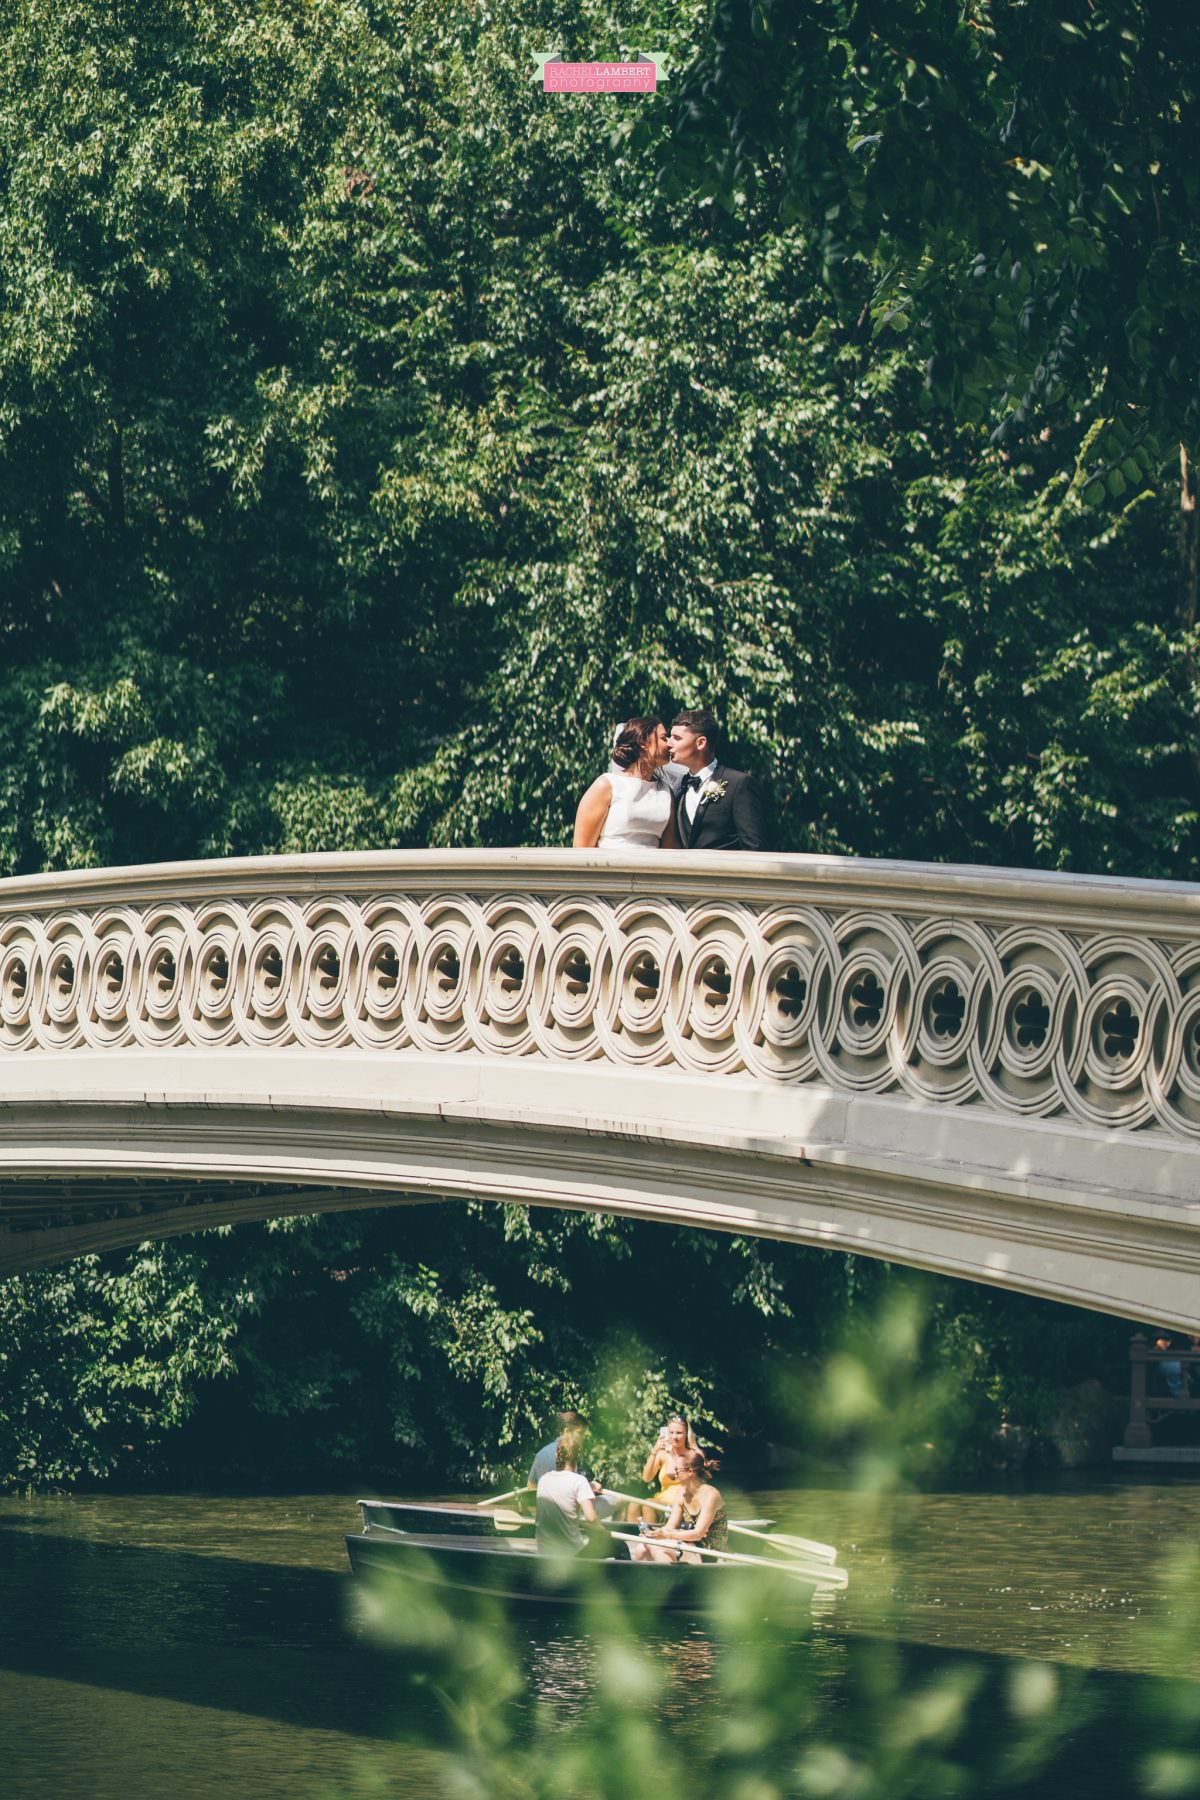 rachel lambert photography new york wedding photos bride and groom central park bow bridge